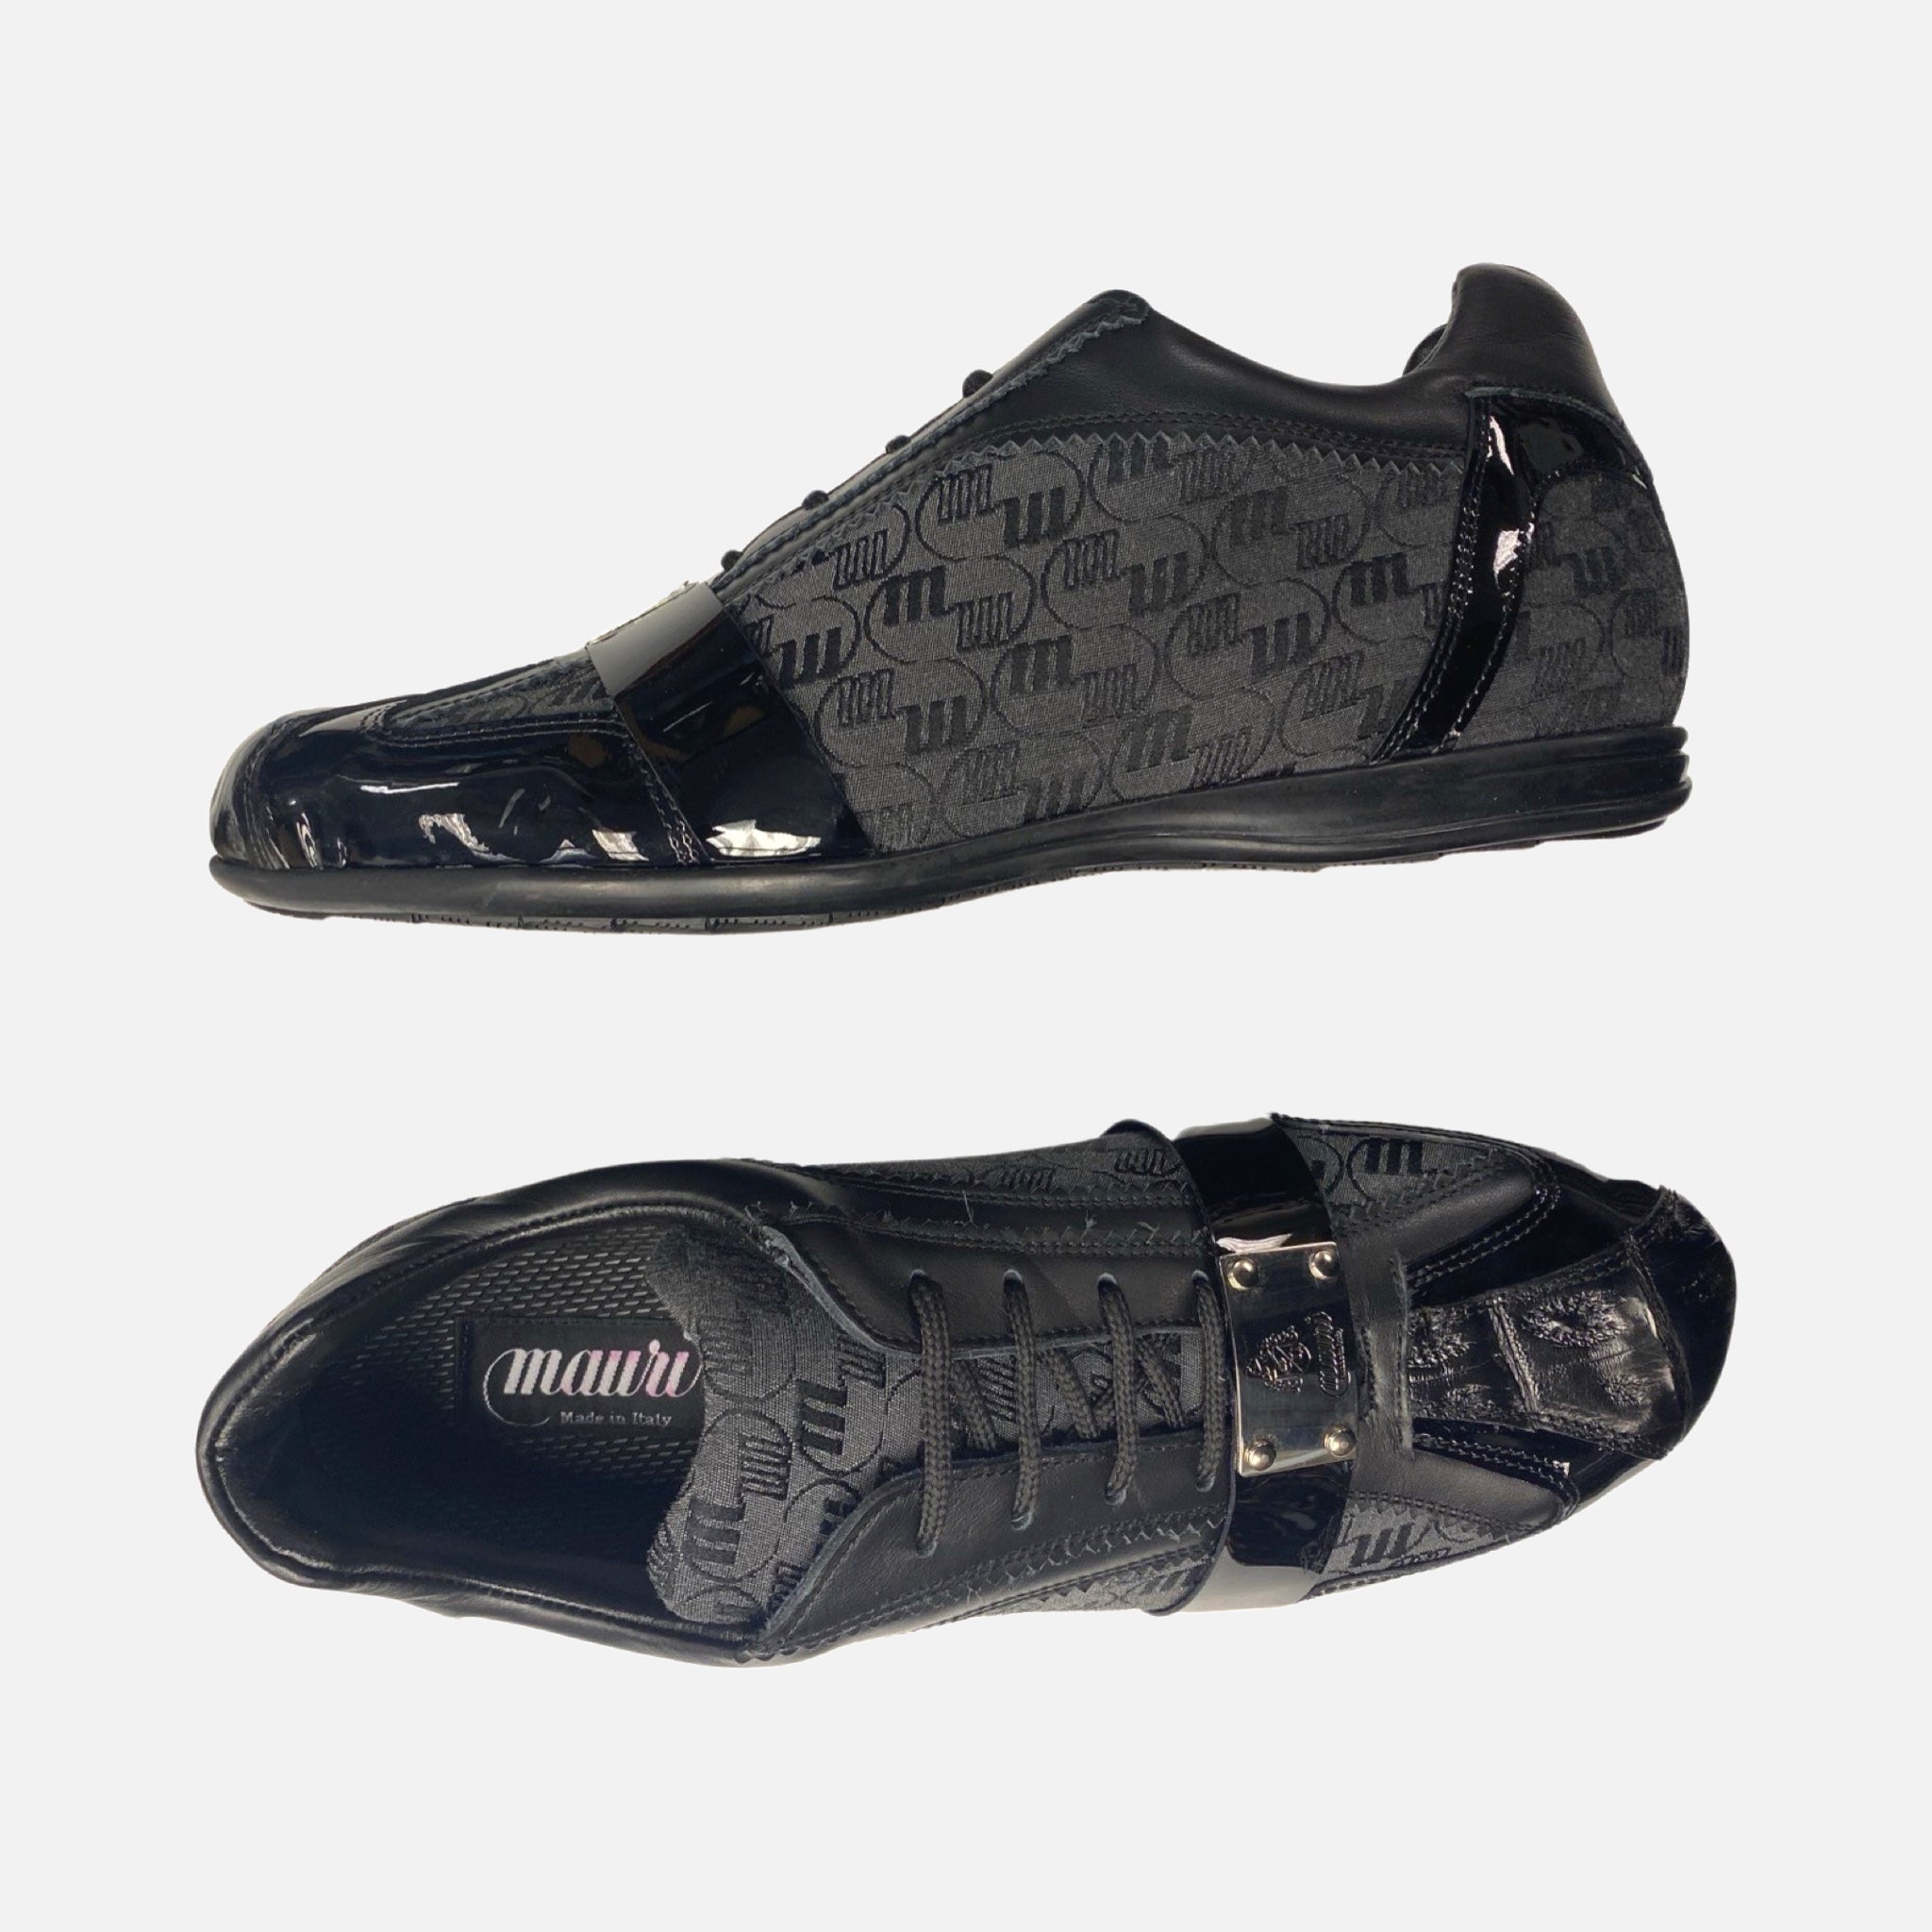 Mauri 8840 Black baby croc/napa/fabric sneakers